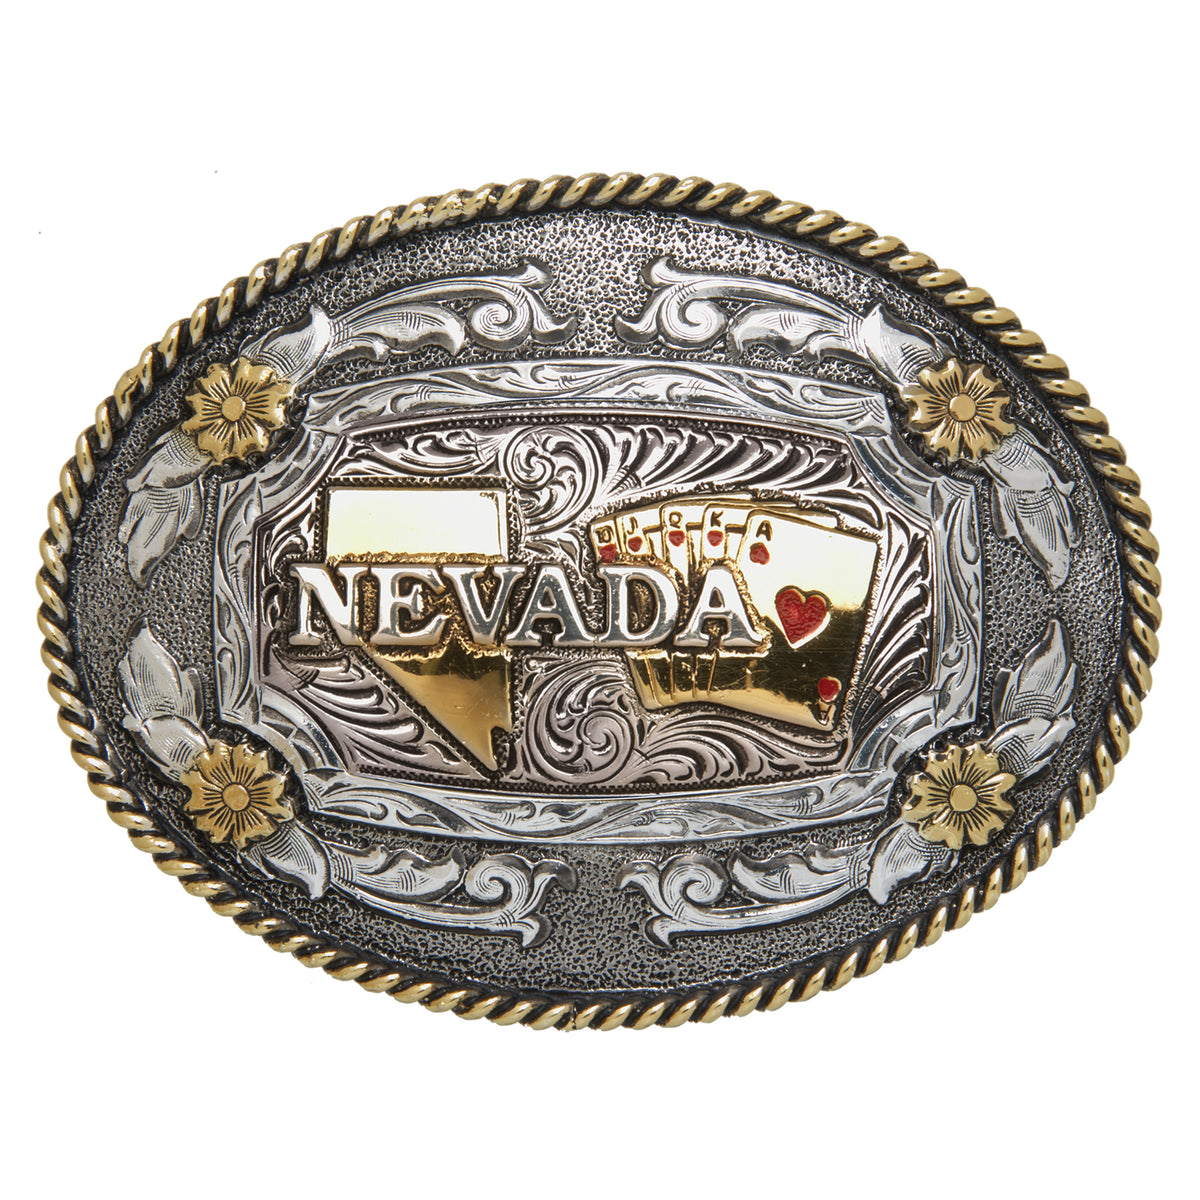 Nevada — Oval Rope Edge Buckle